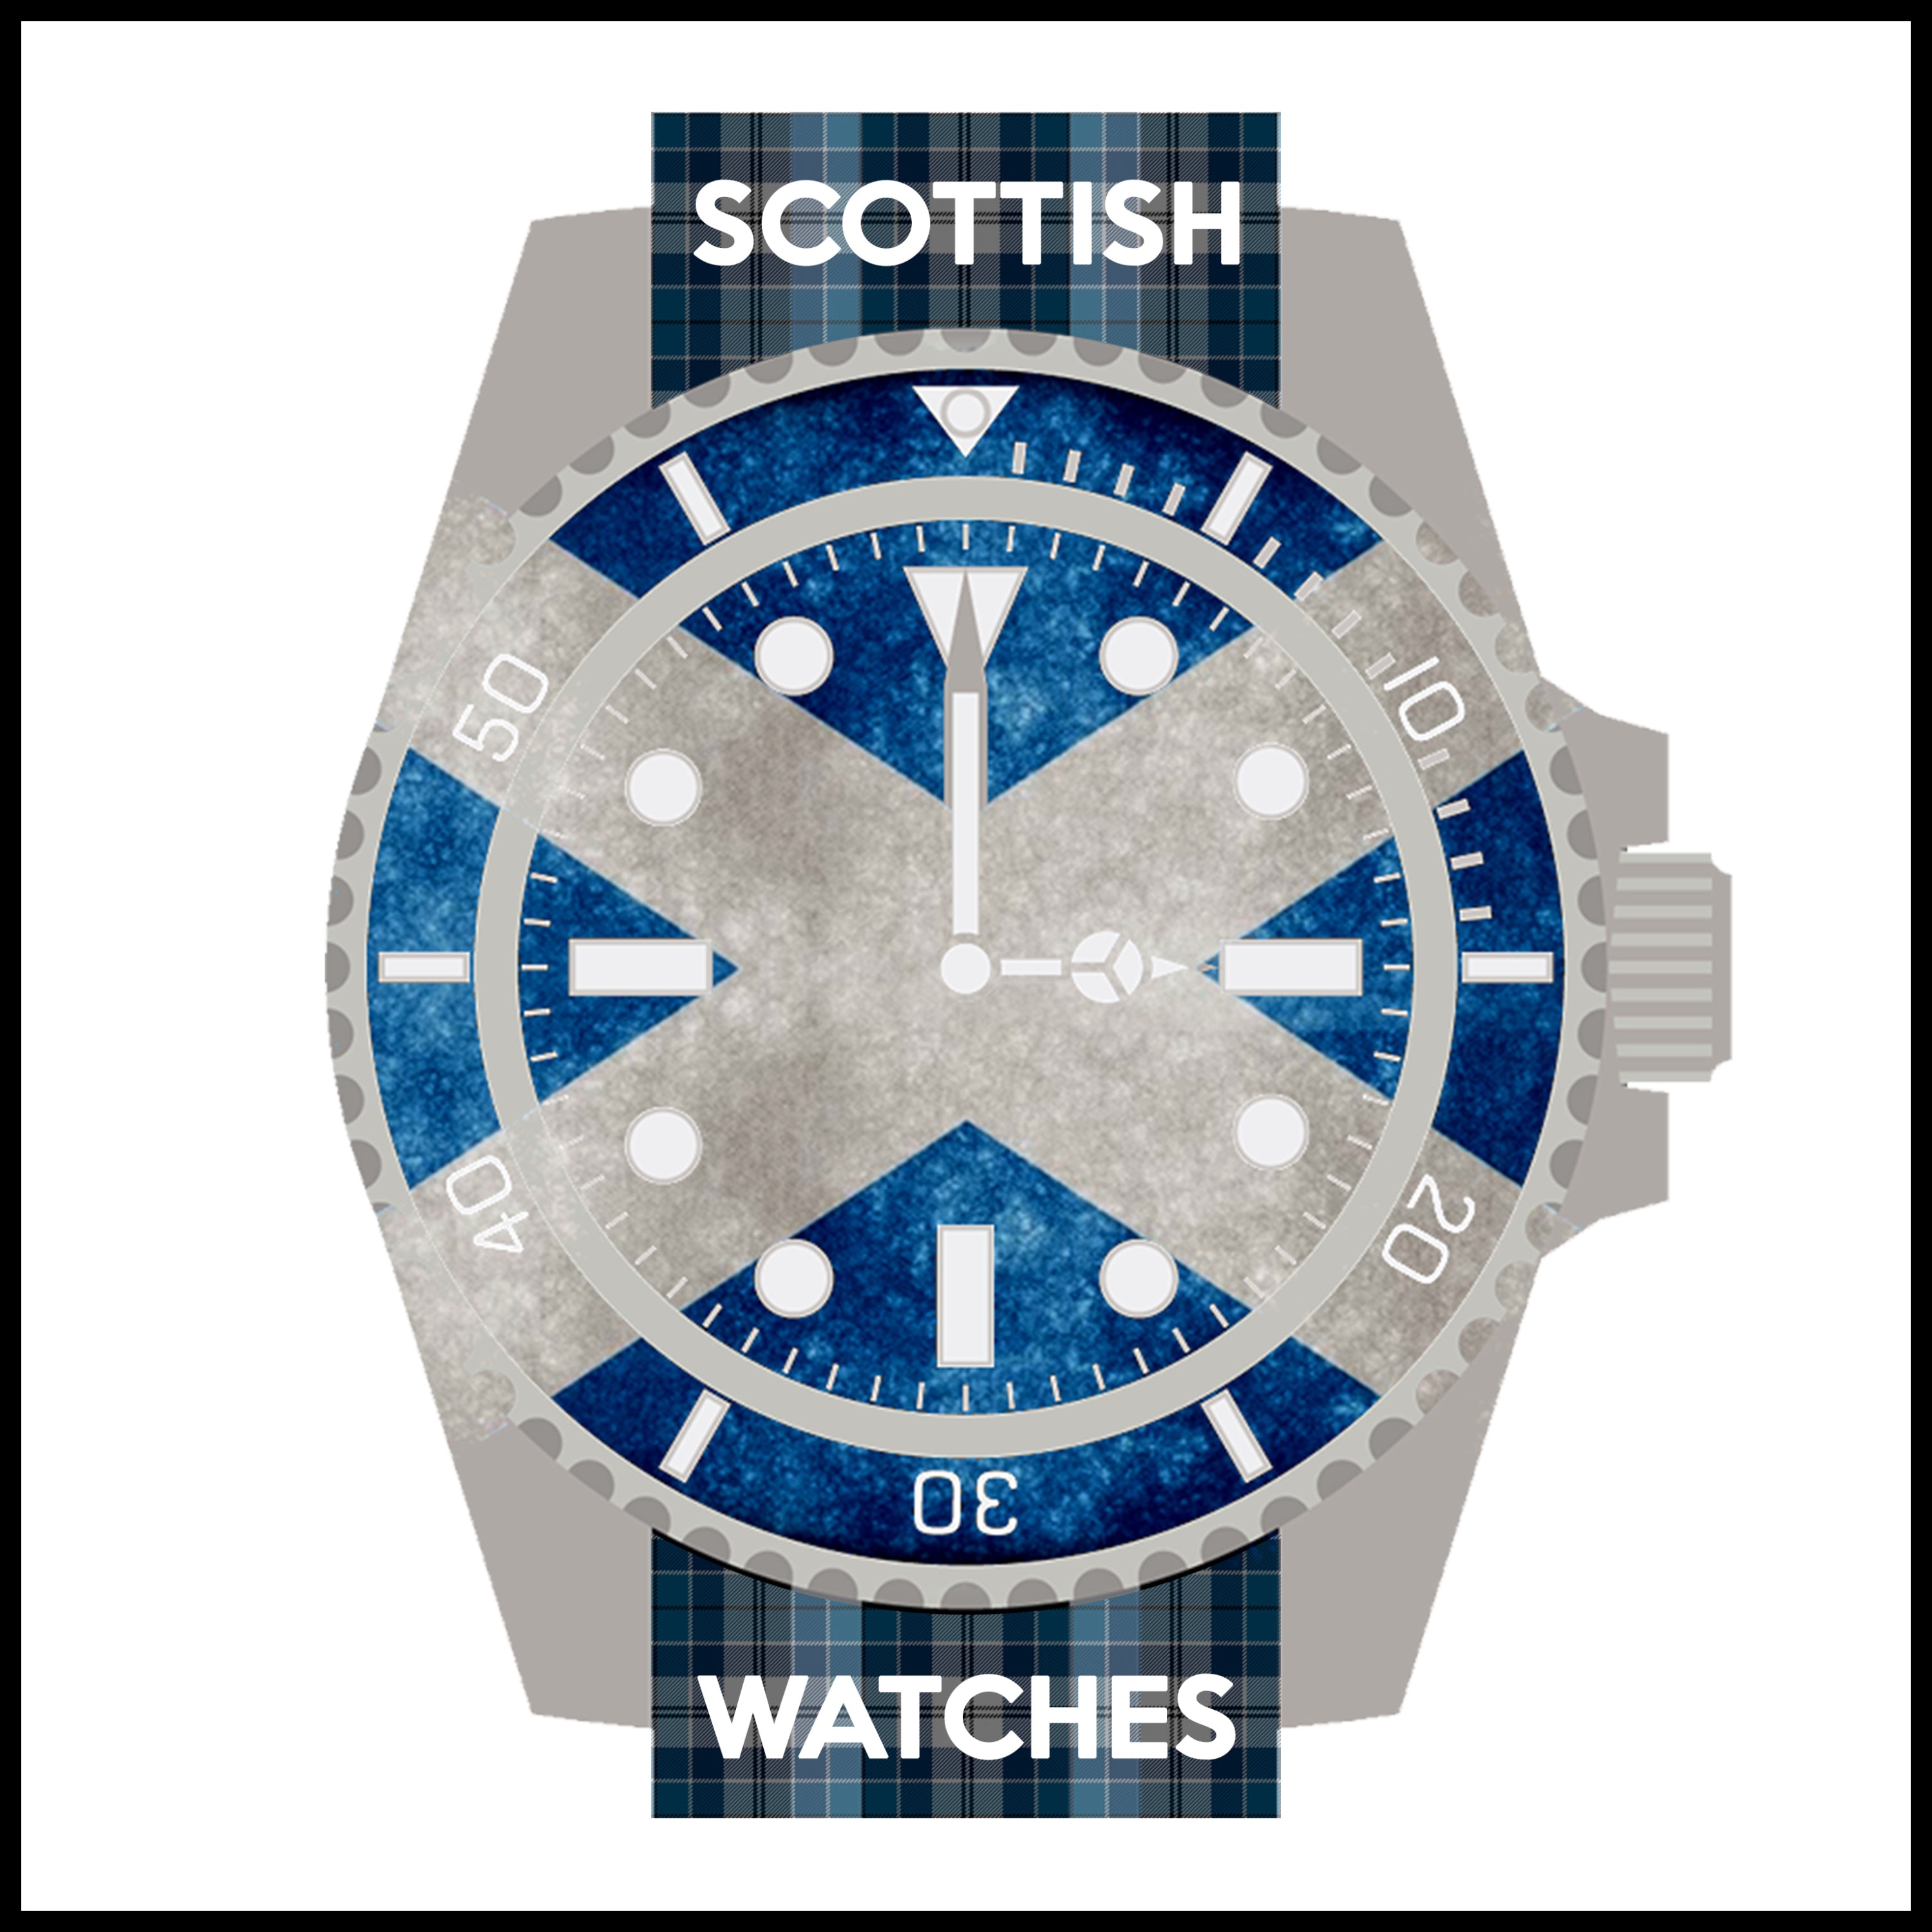 Scottish Watches Podcast